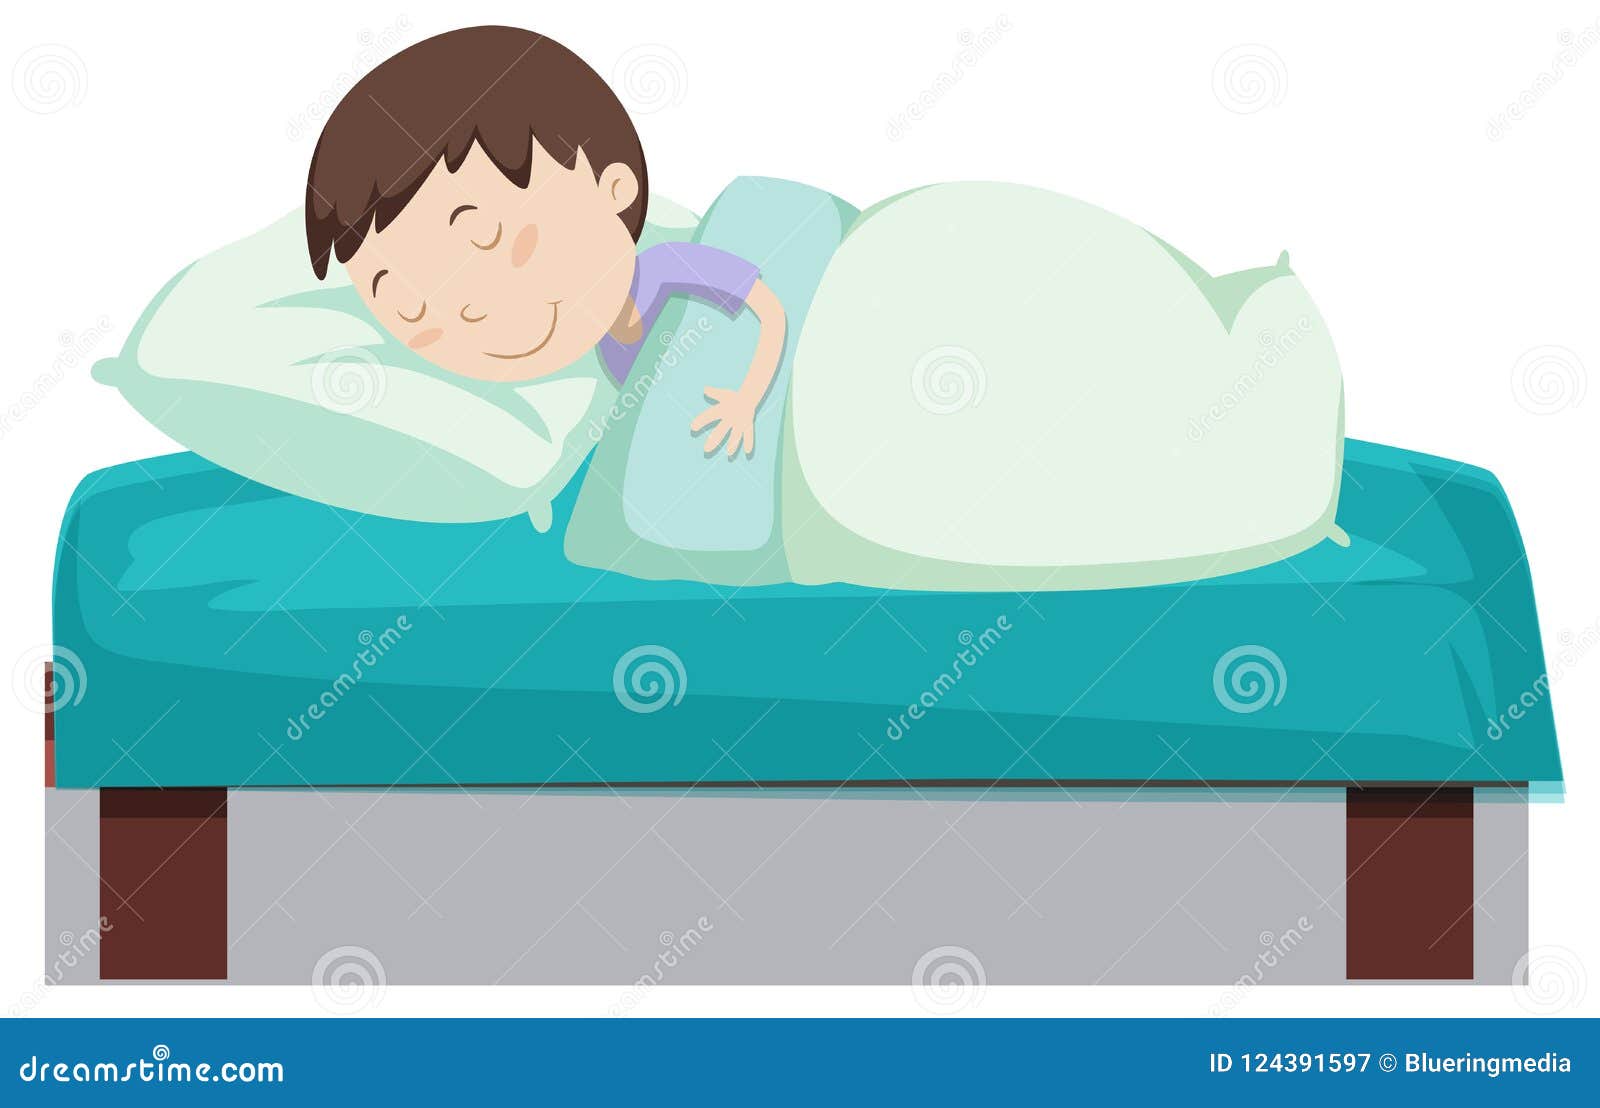 Boy sleeping in bed stock vector. Illustration of sleeping - 124391597